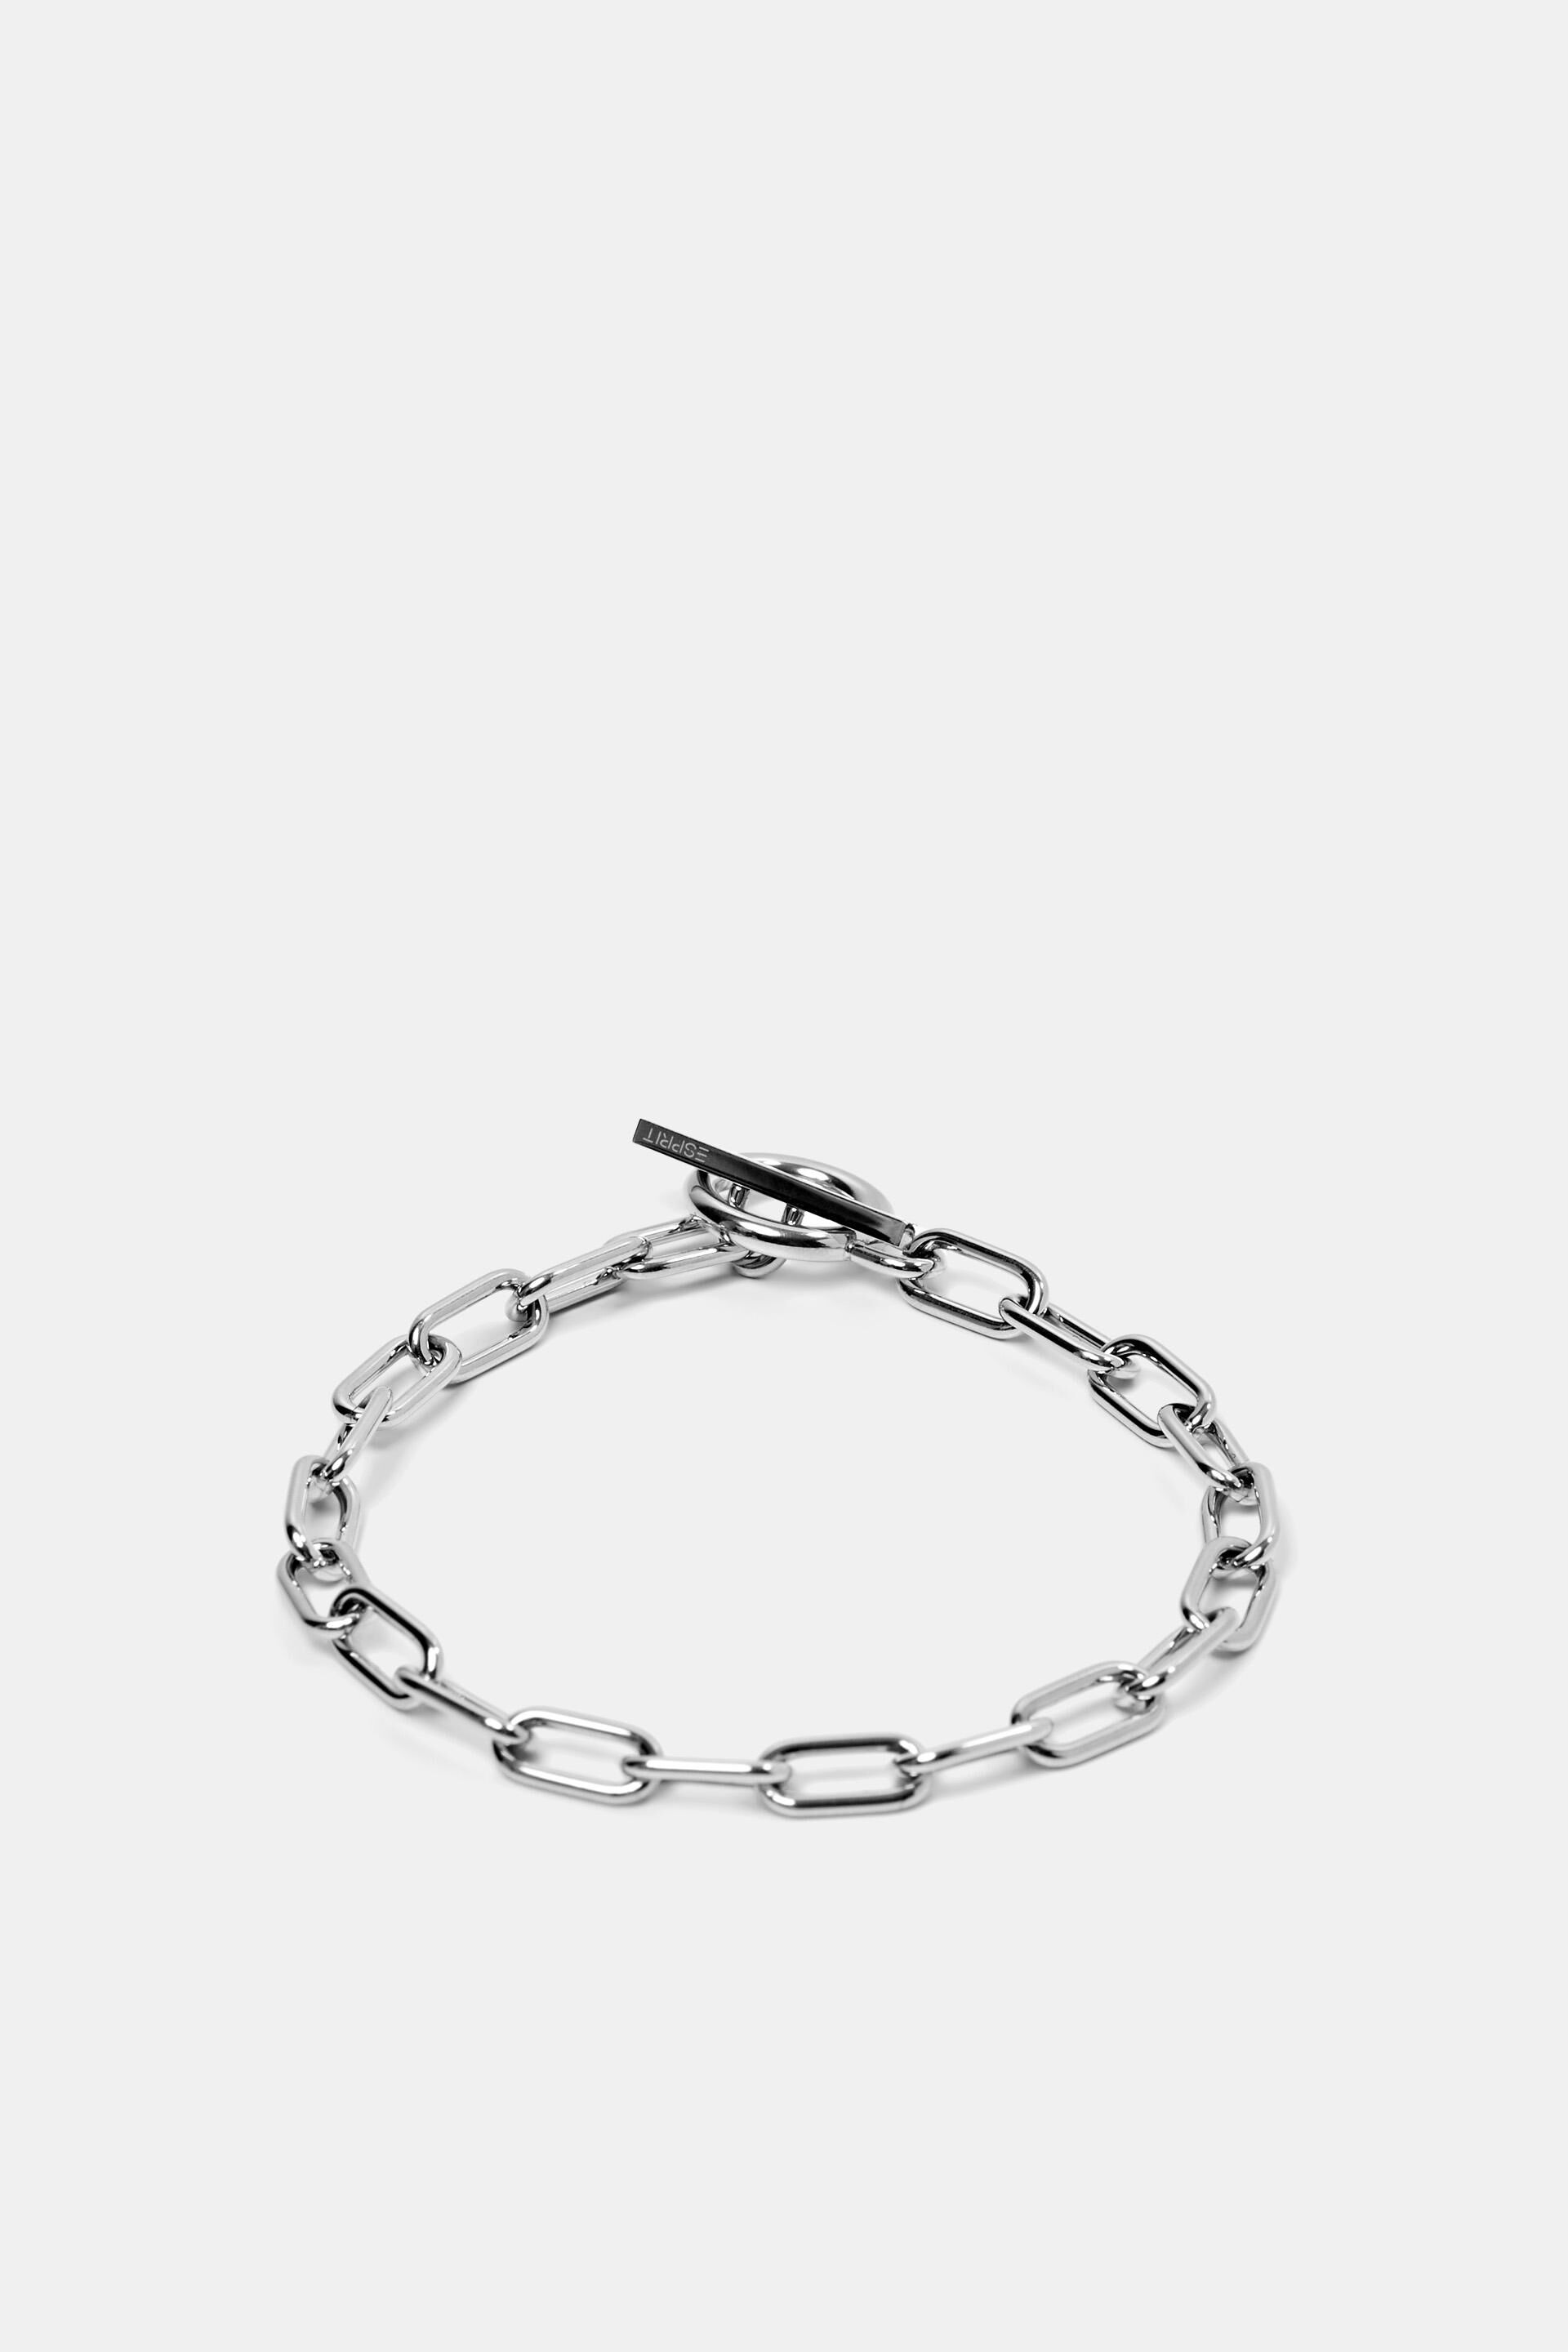 Esprit stainless Chain bracelet, steel